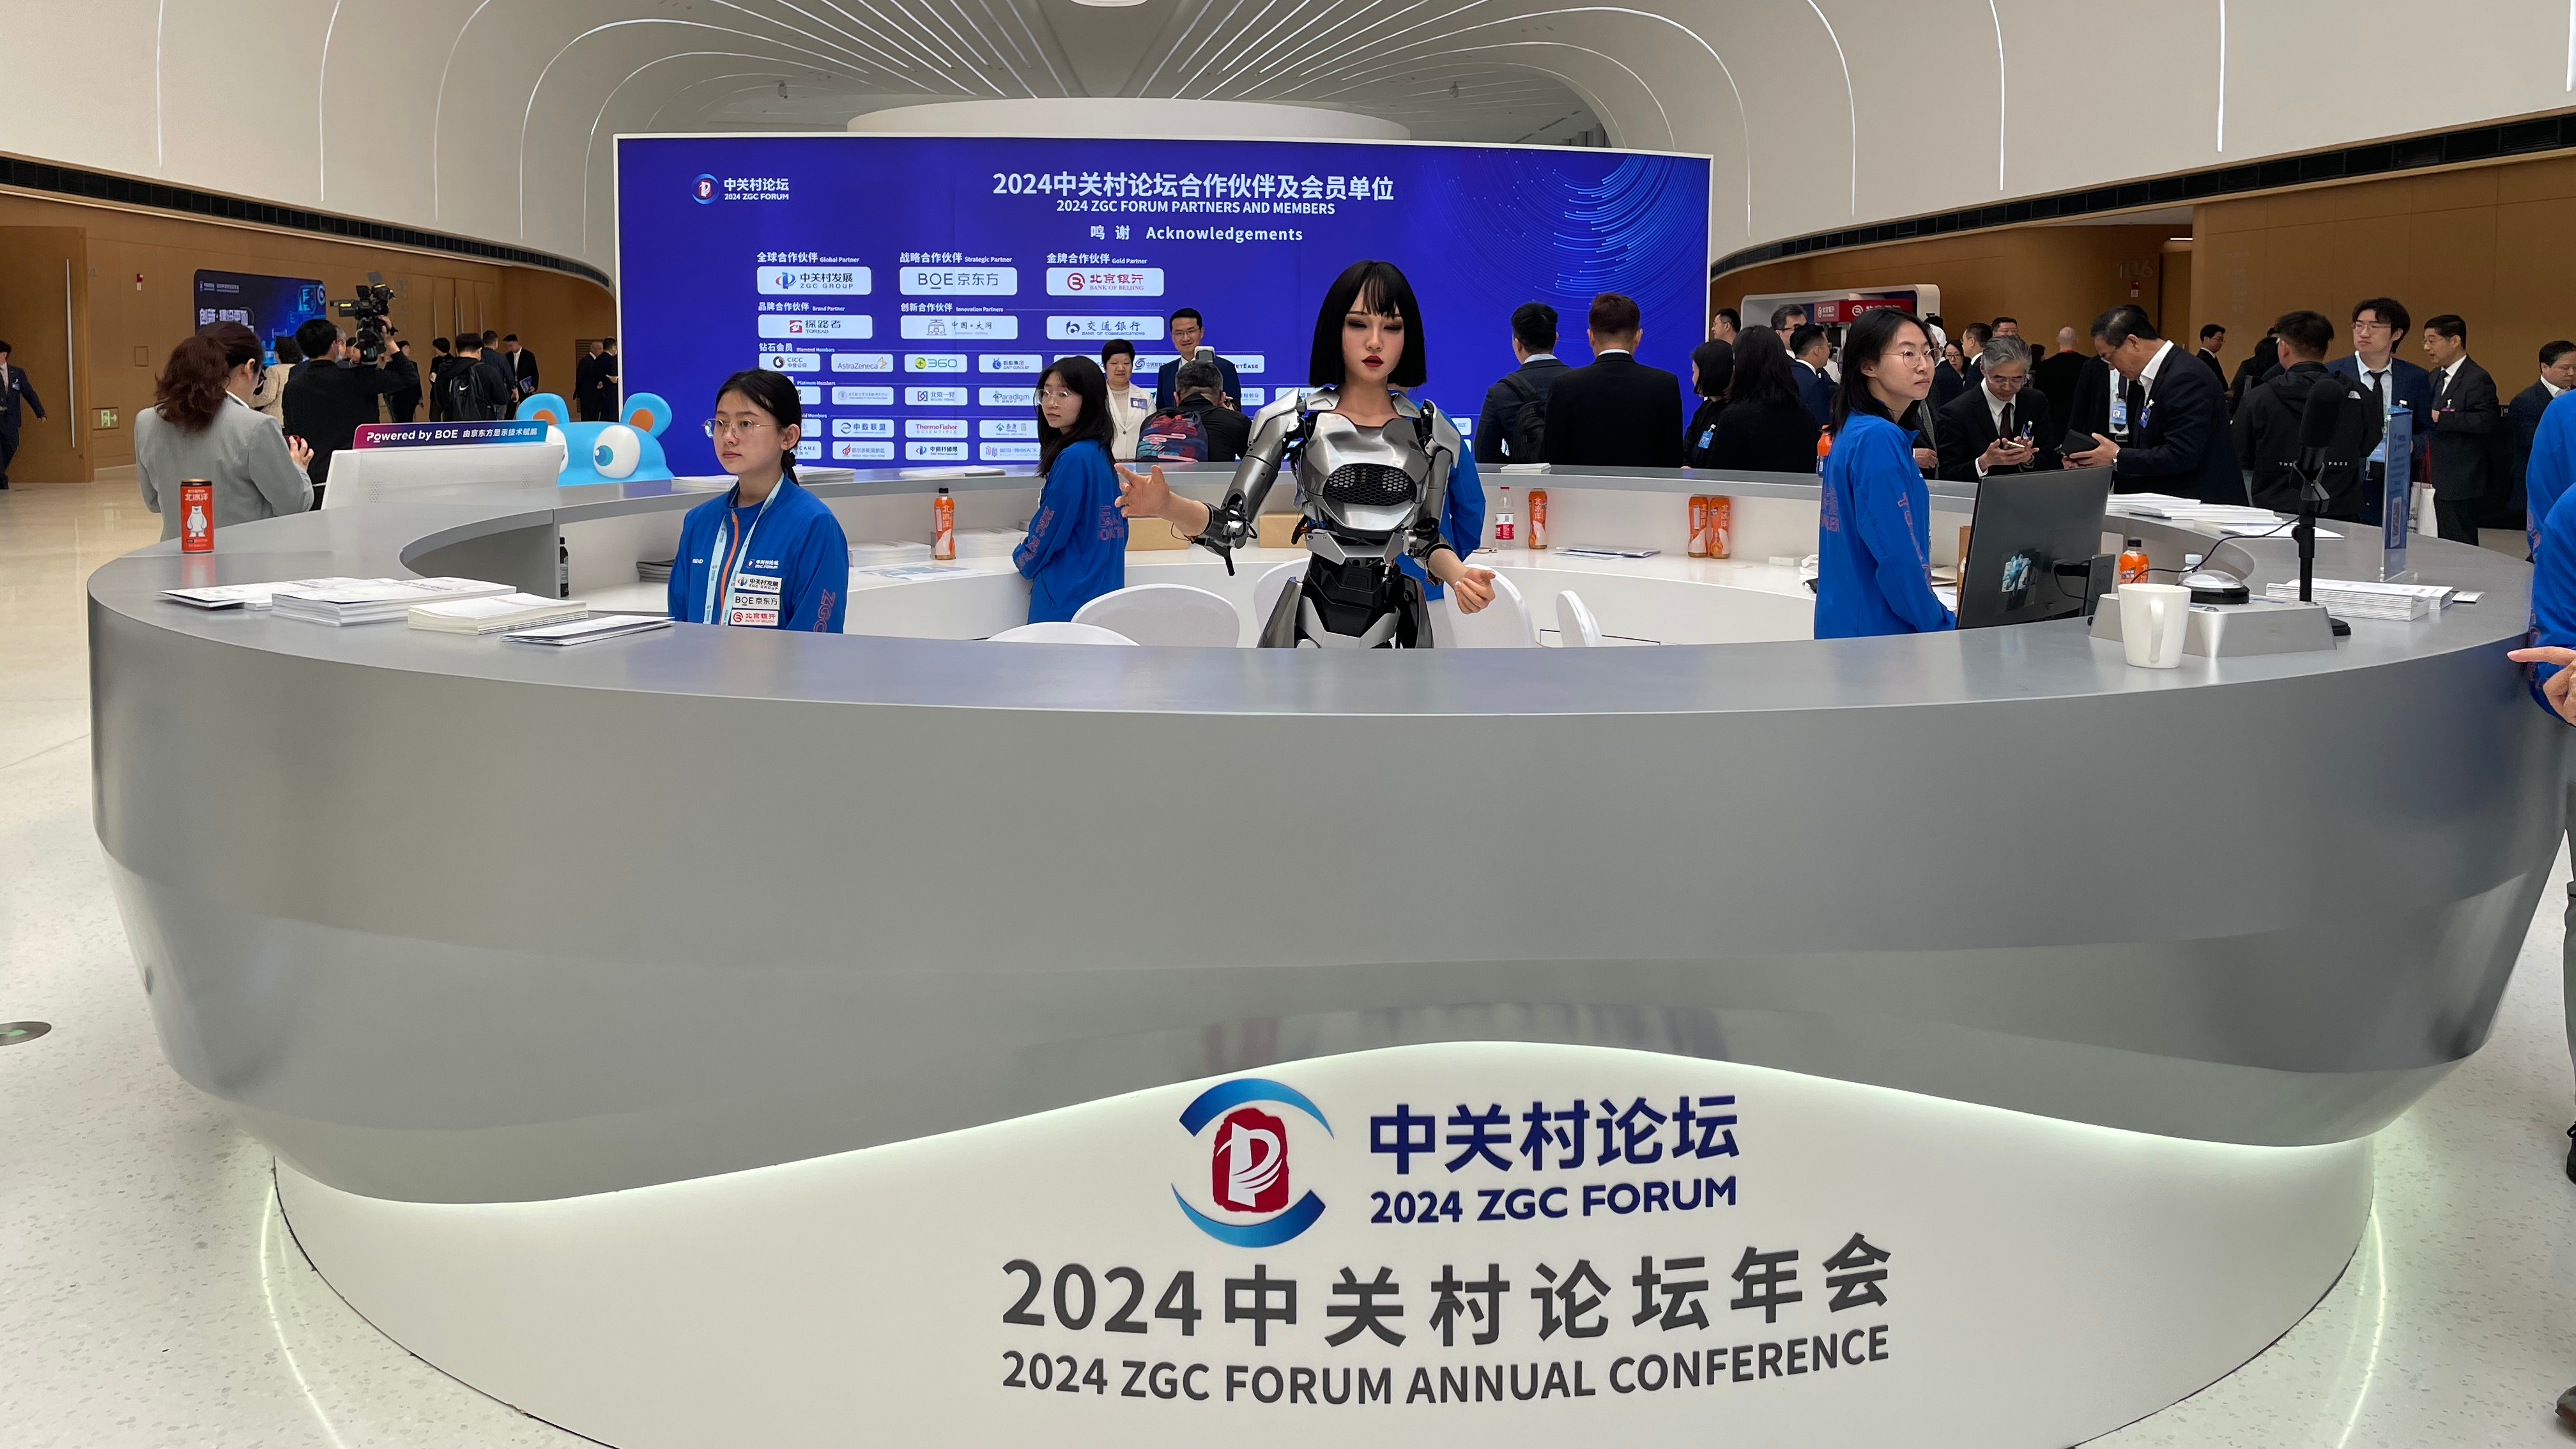 Live: Reporter's on-site visit to 2024 Zhongguancun Forum